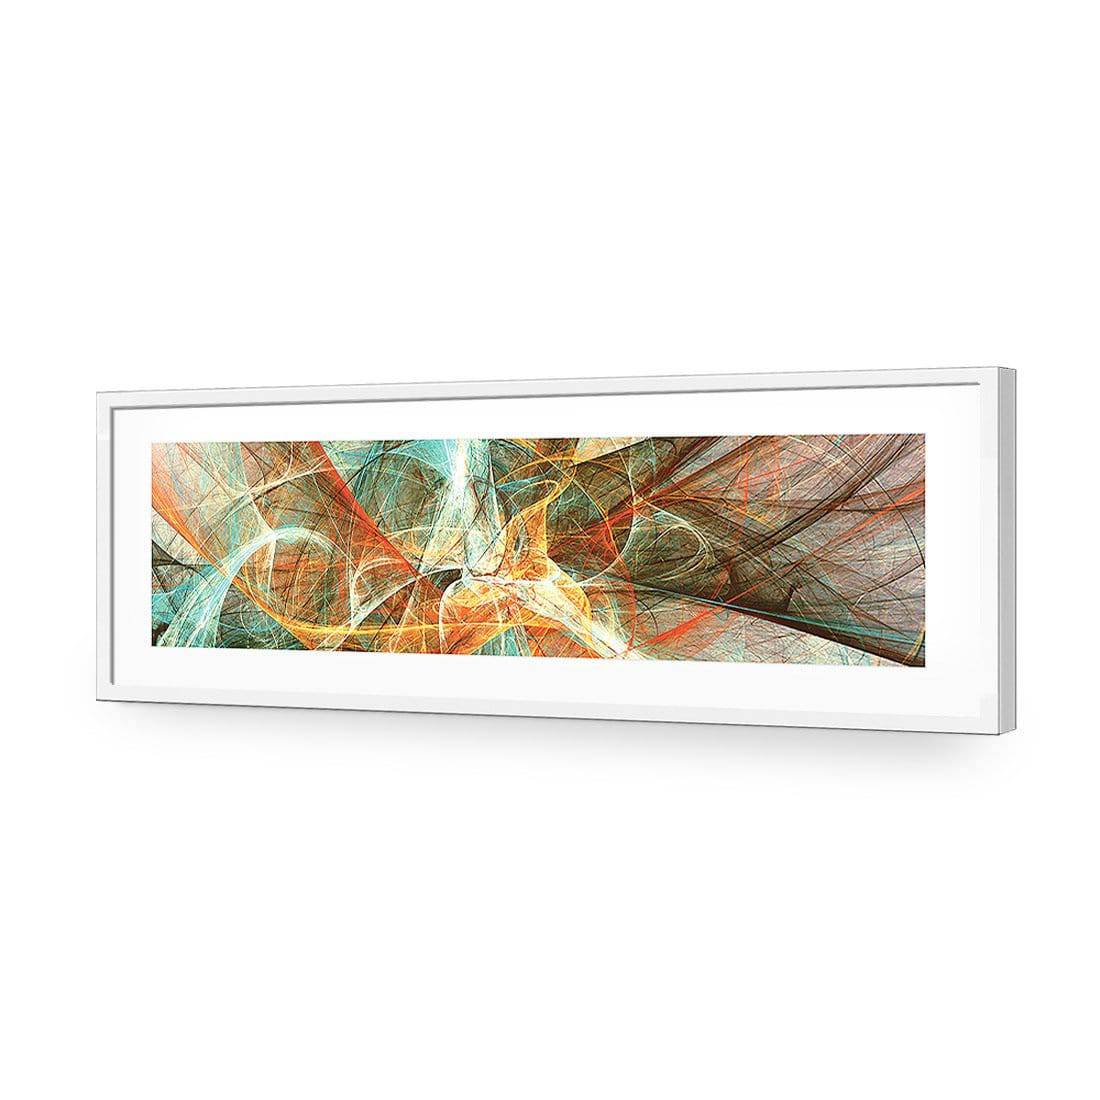 Webbed, Long-Acrylic-Wall Art Design-With Border-Acrylic - White Frame-60x20cm-Wall Art Designs